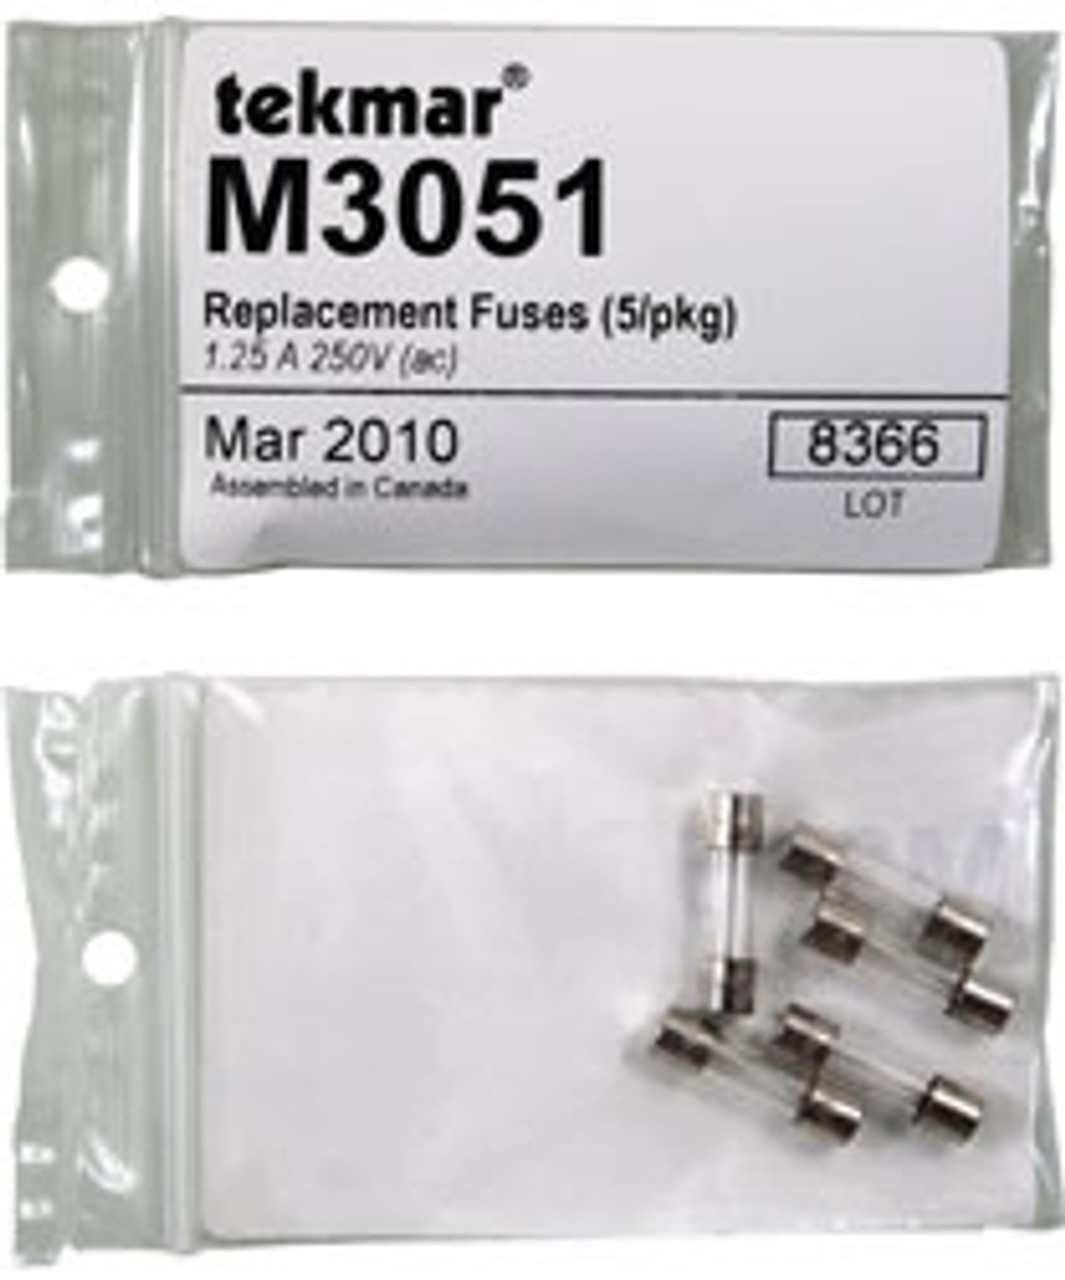 Tekmar M3051 Replacement Fuses (5/pkg) 1.25 A 250V (ac)